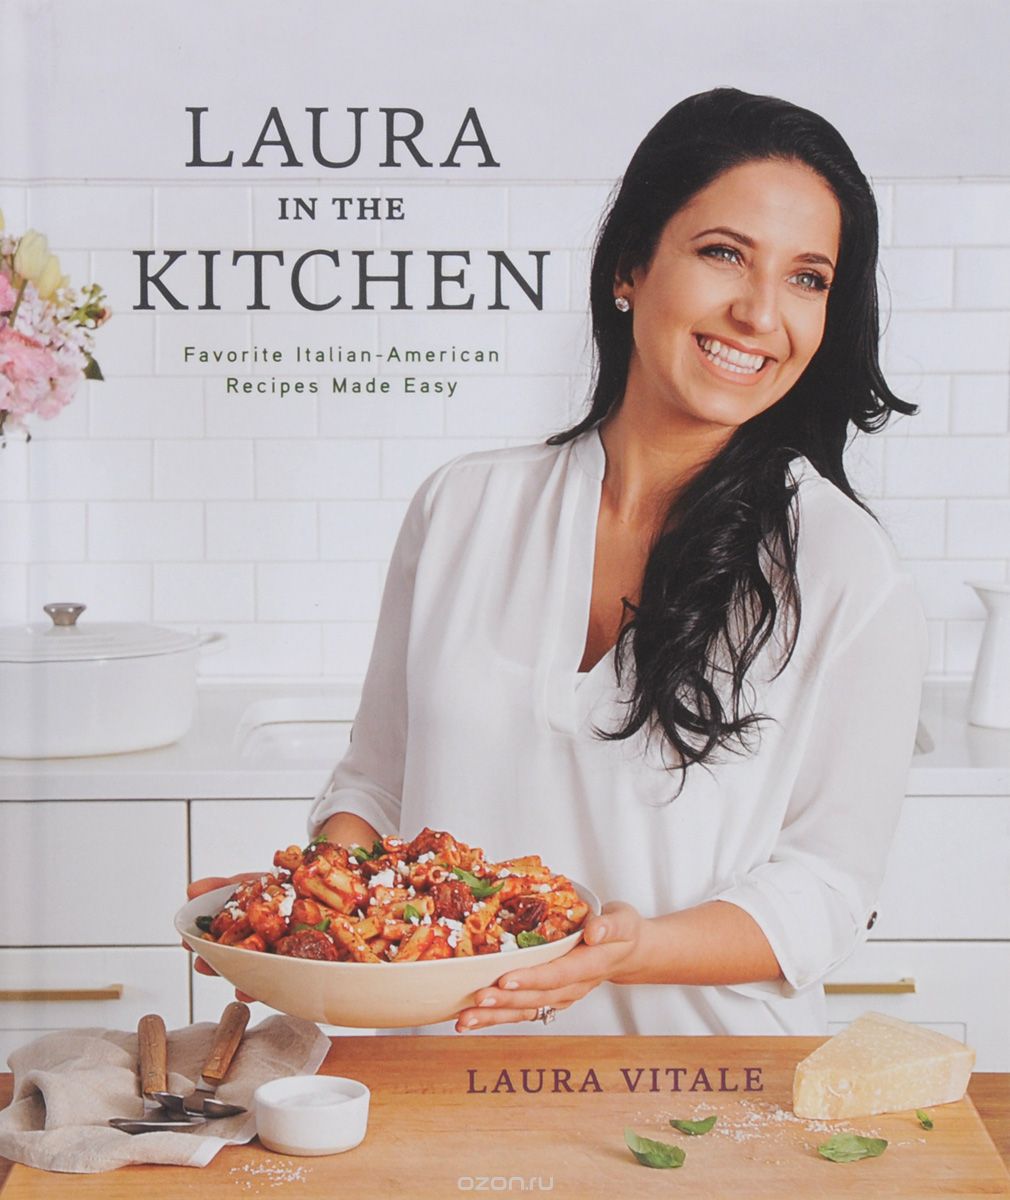 Скачать книгу "Laura in the Kitchen: Favorite Italian-American Recipes Made Easy"